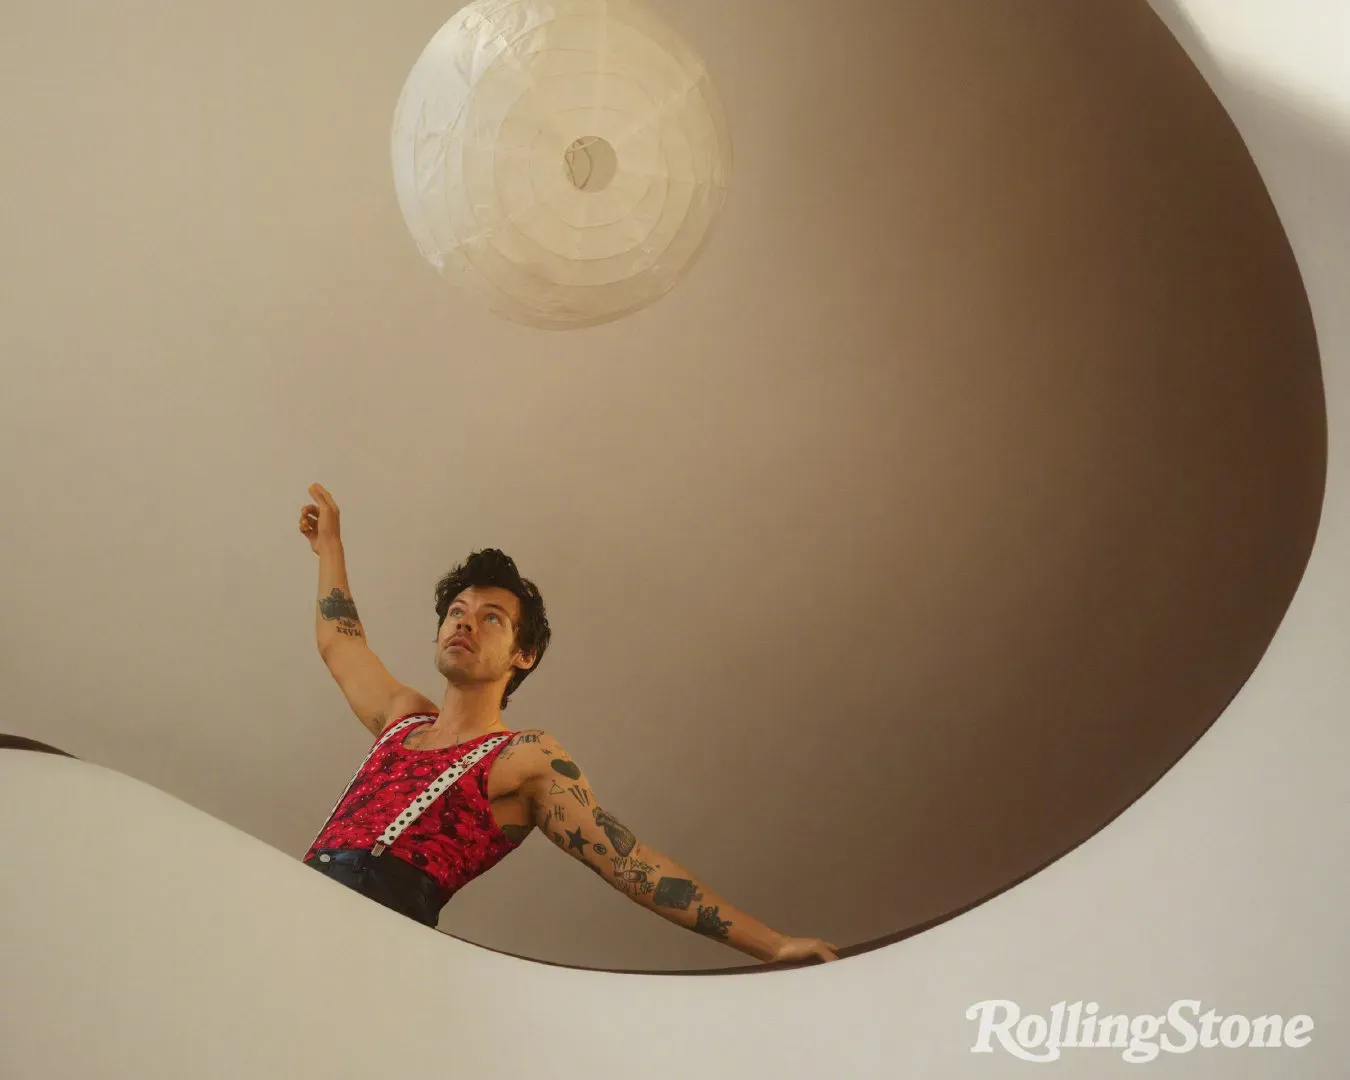 Harry Styles, 'Rolling Stone' magazine September photo | FMV6